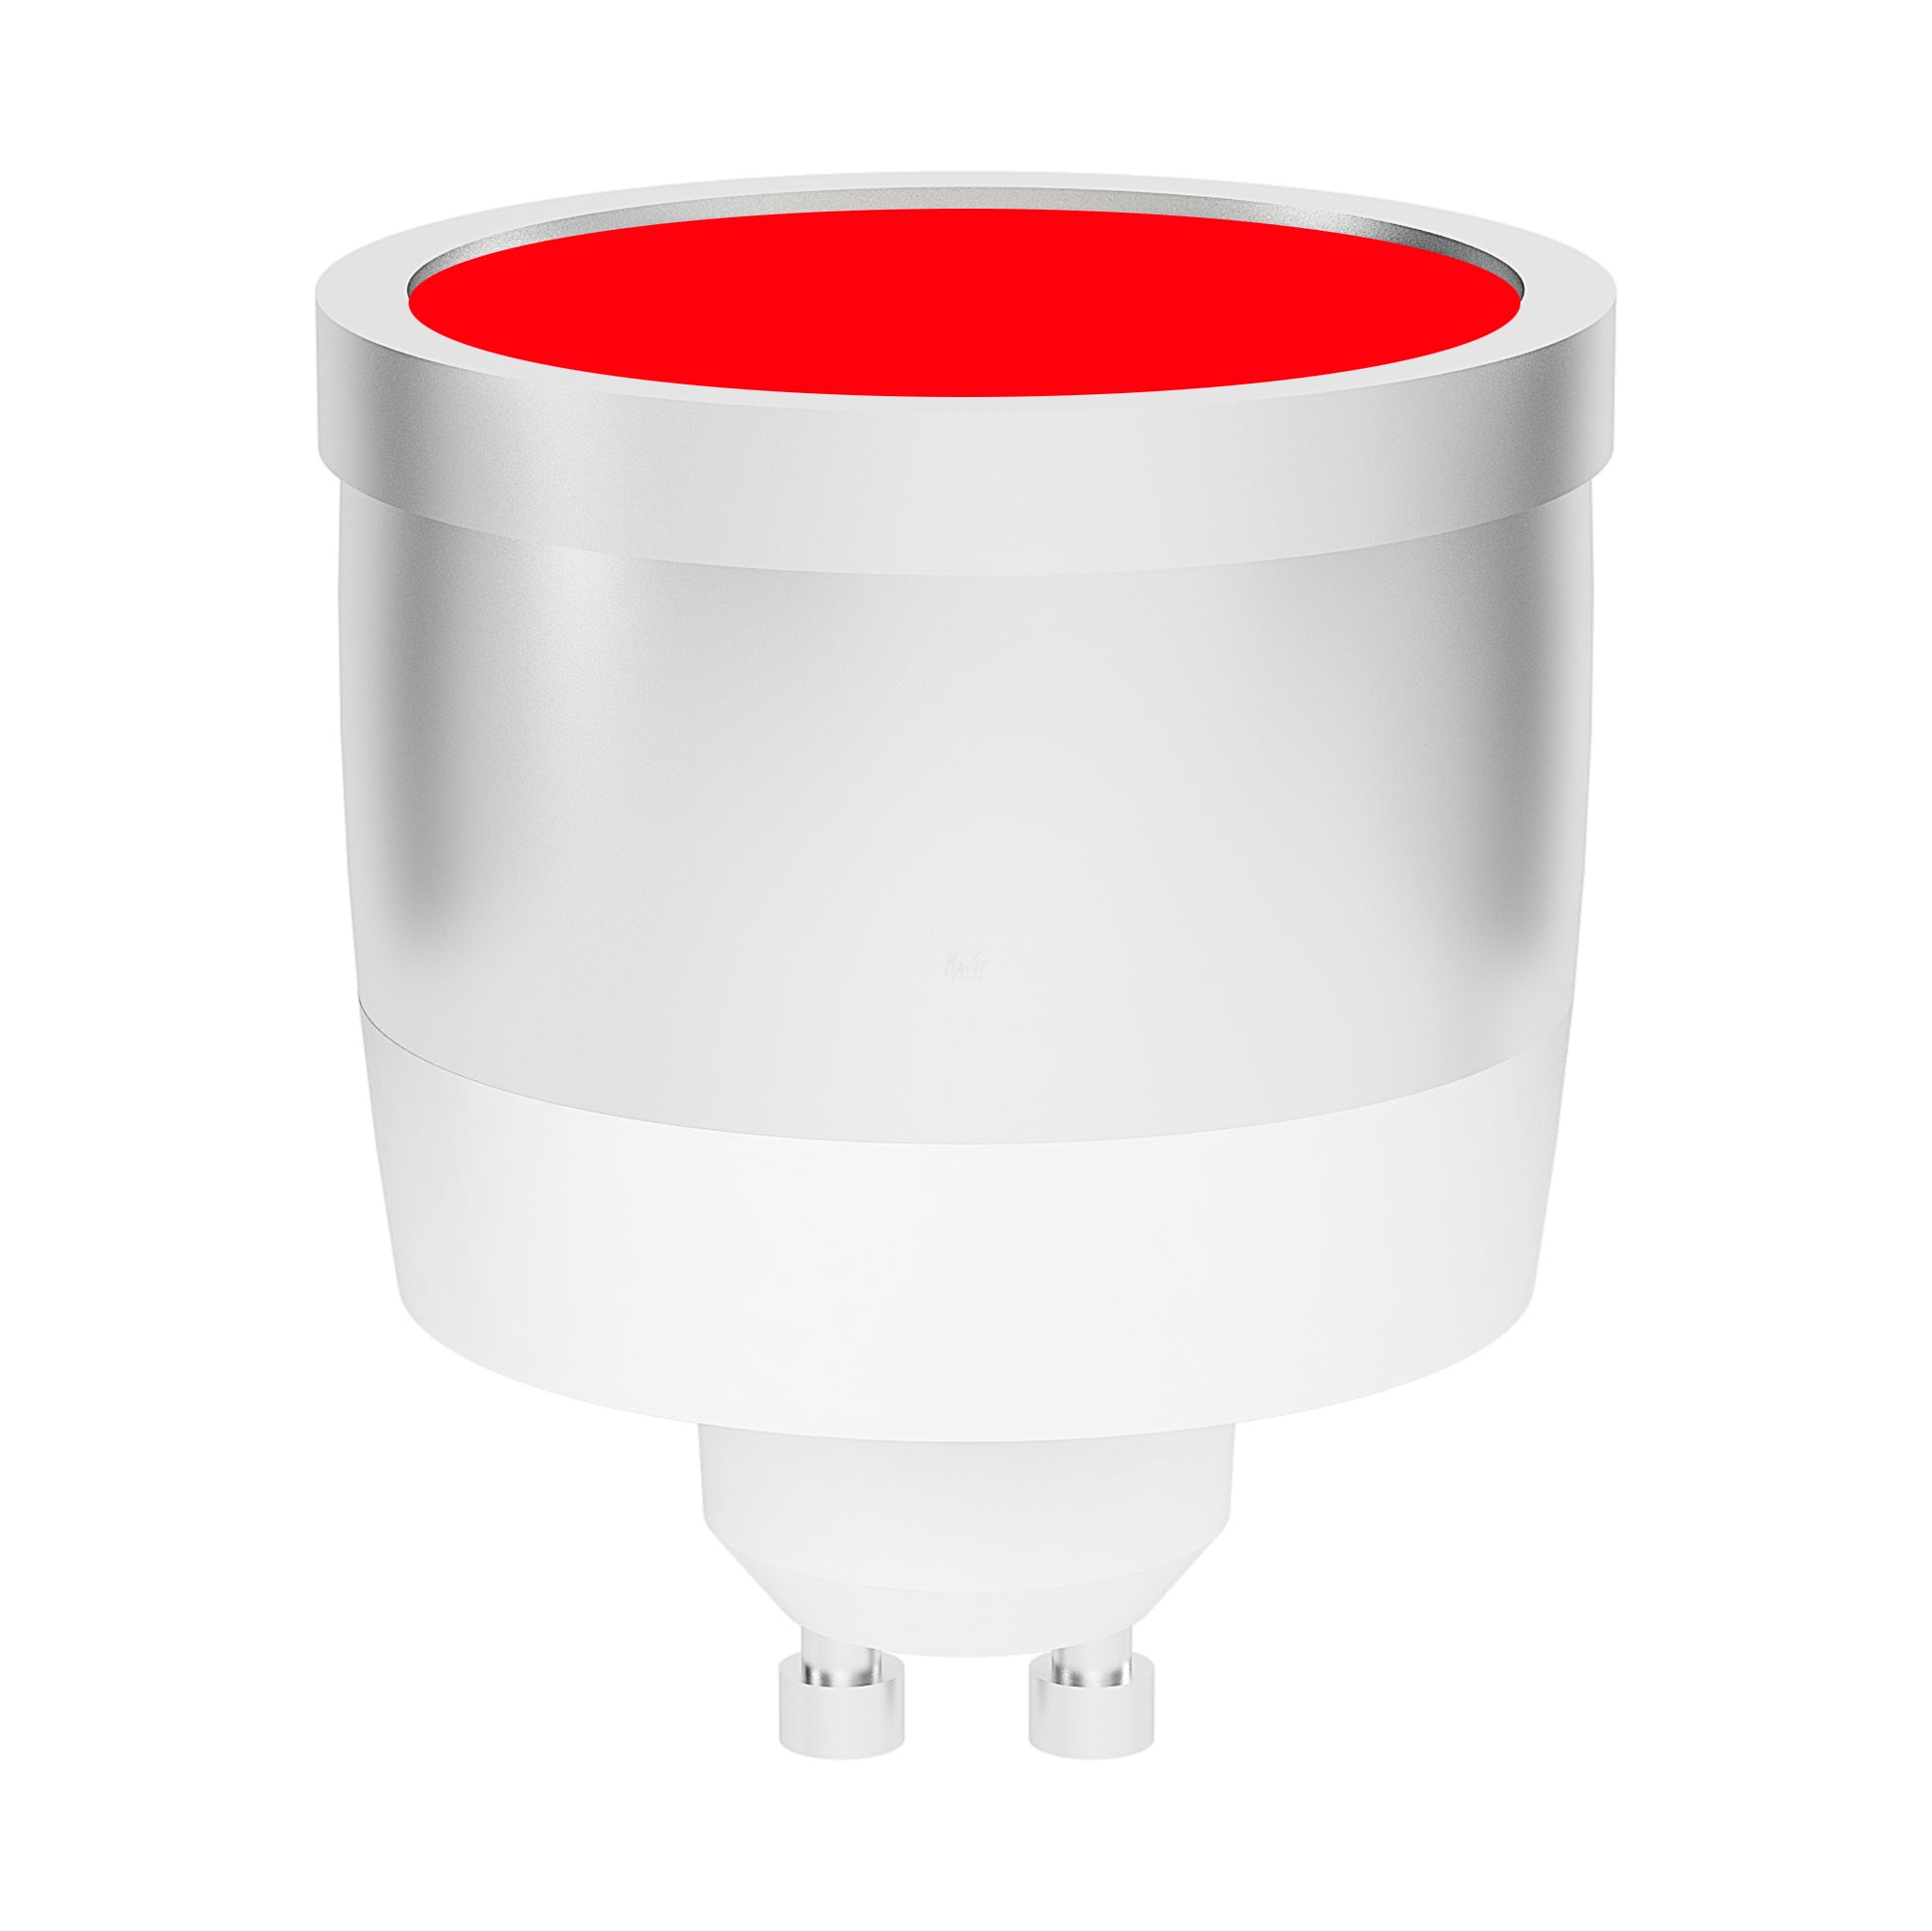 HV9506R - Red 5w 240V GU10 LED Globe